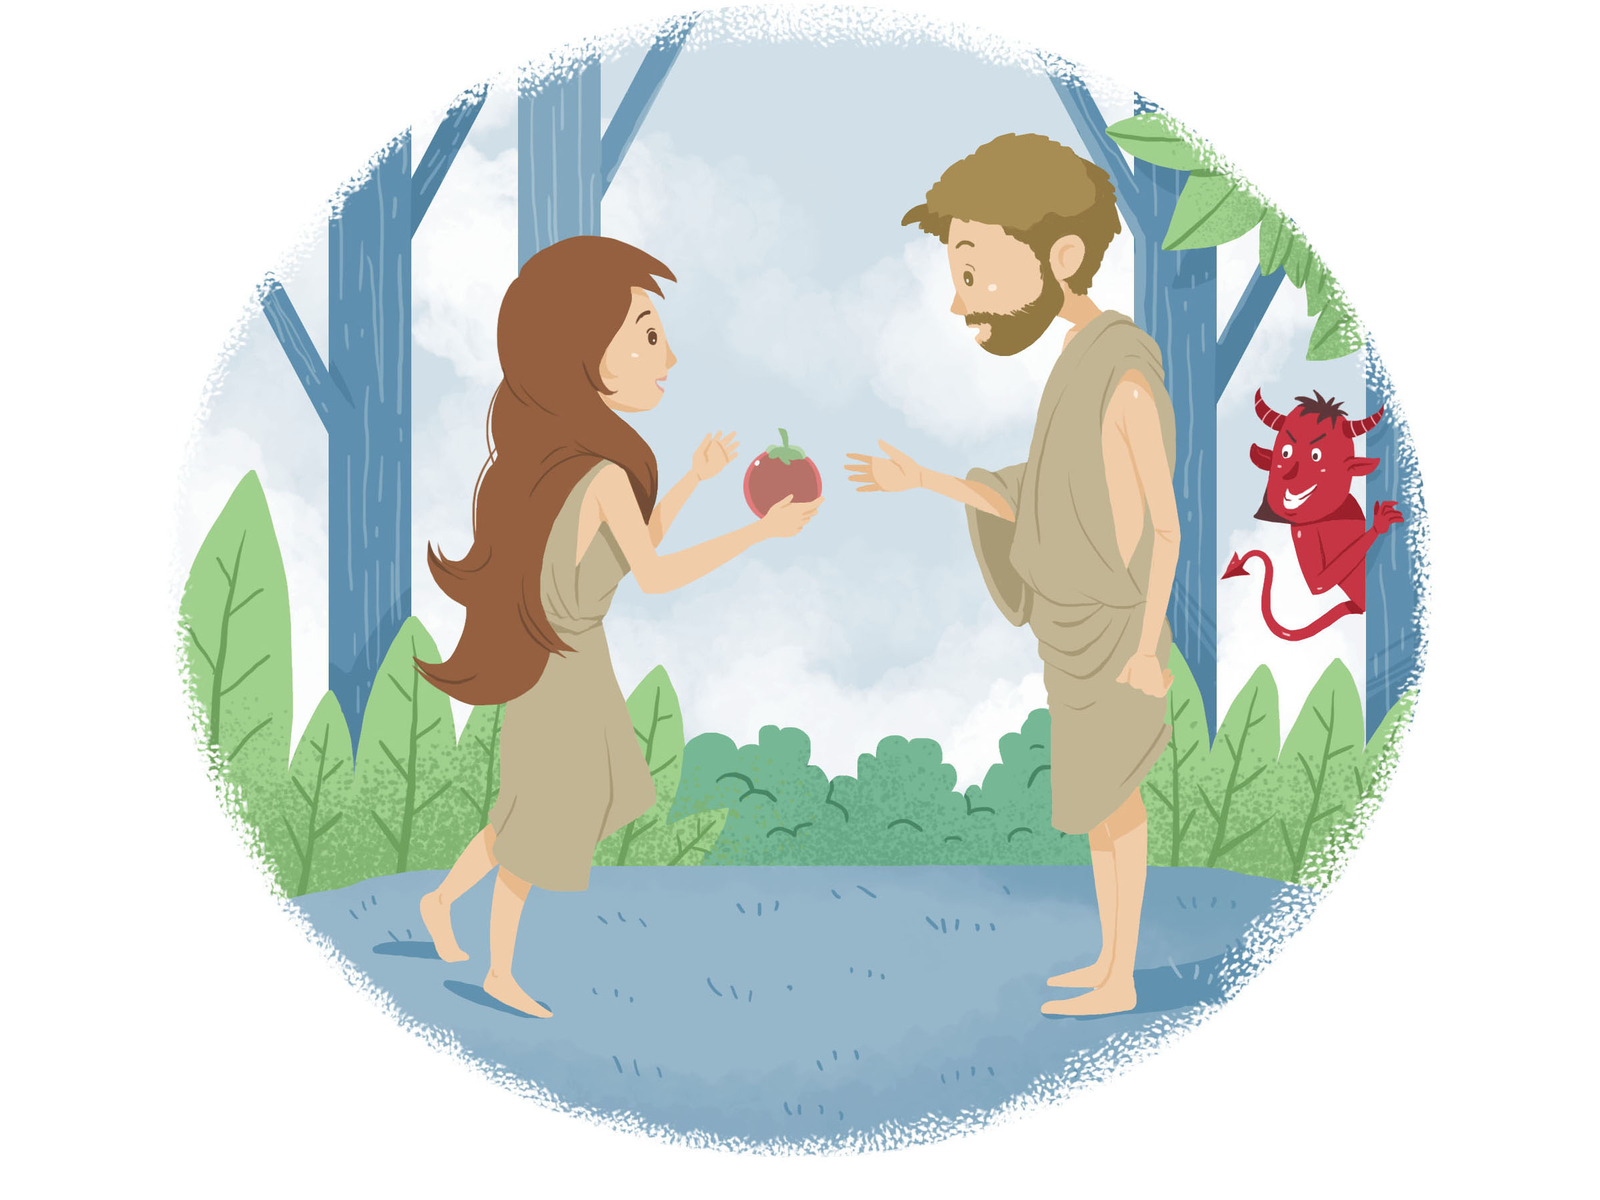 Eve & Adam illustration by Rawtwo Studio on Dribbble